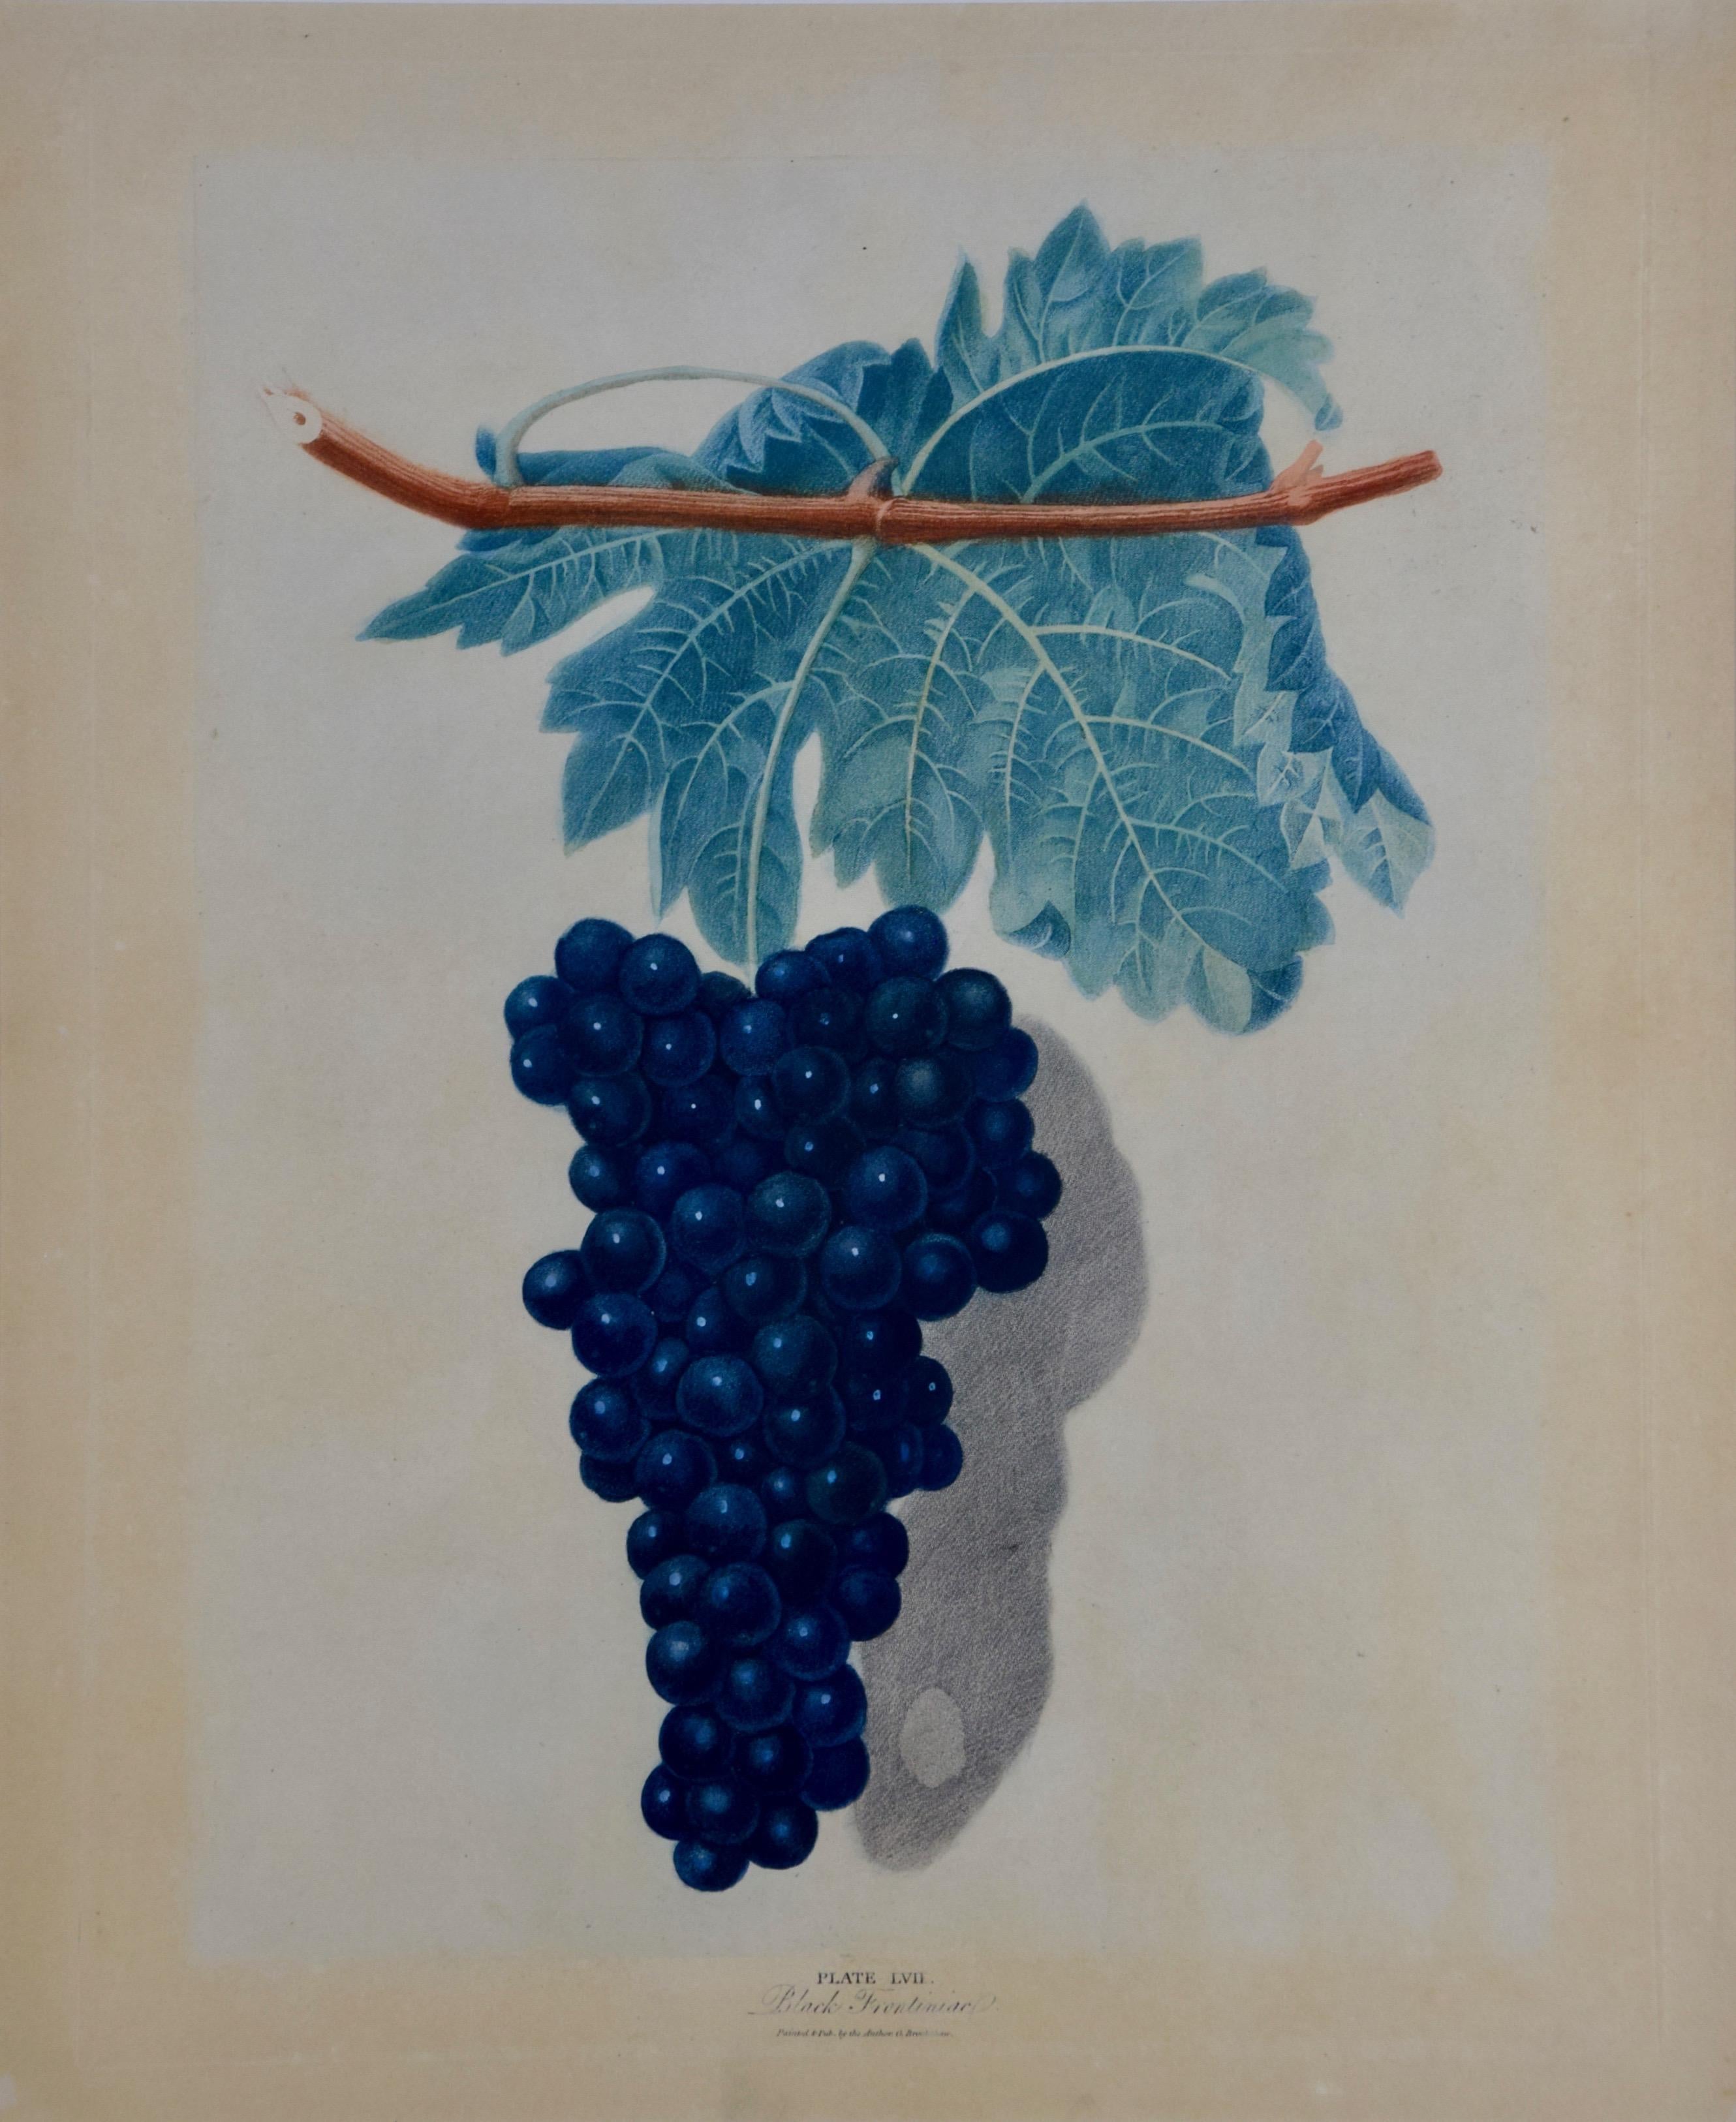 George Brookshaw's Black Frontiniac Wine Grape Aquatint from 